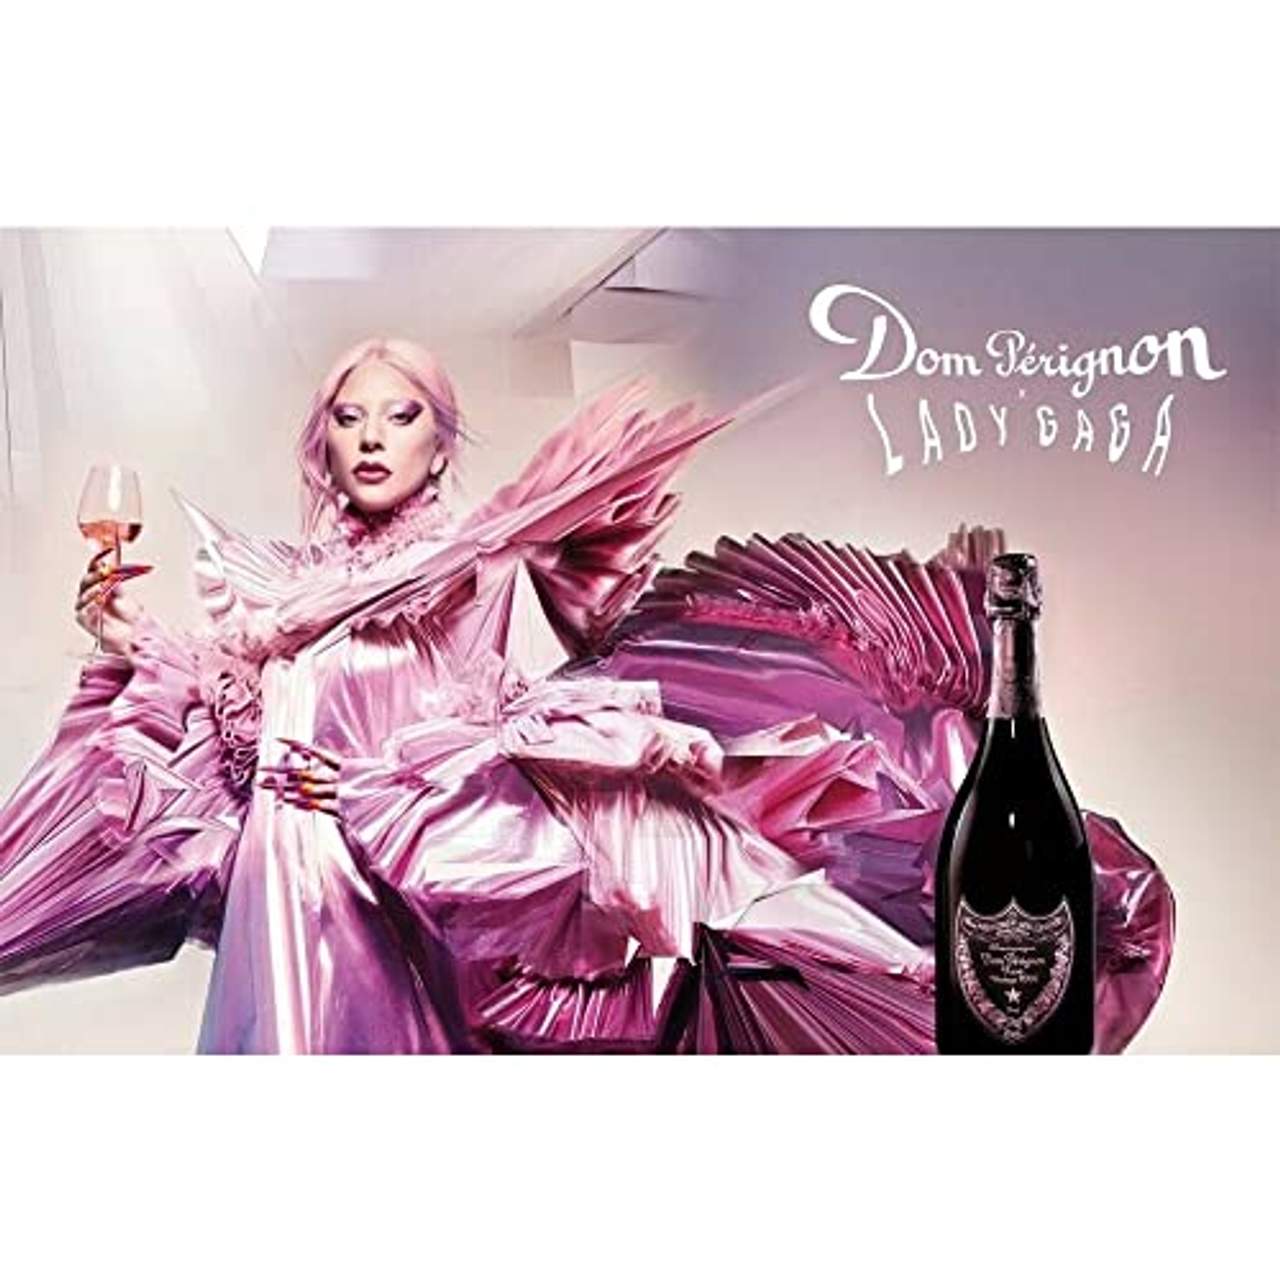 DOM Perignon Rose' Lady Gaga Limited Edition Vintage 2006